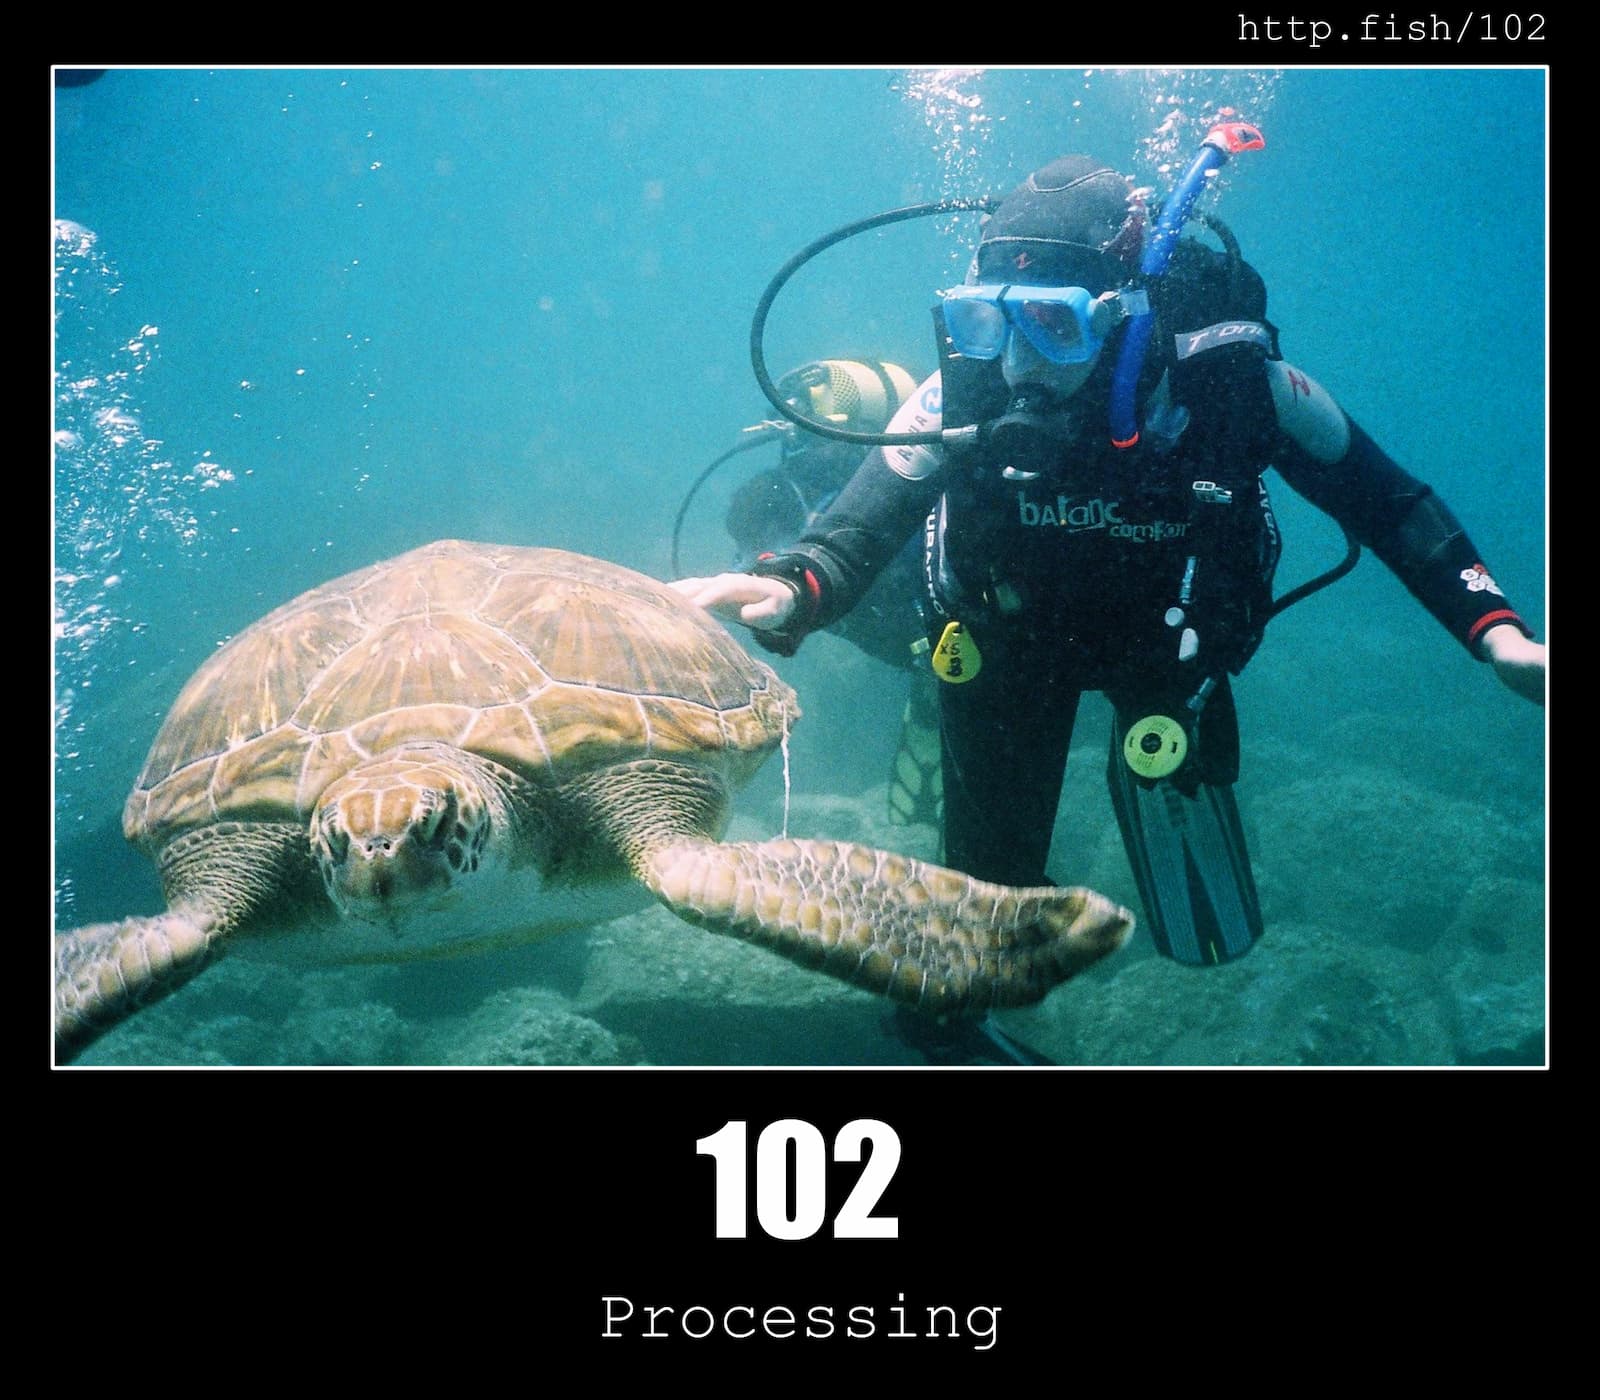 HTTP Status Code 102 Processing & Fish